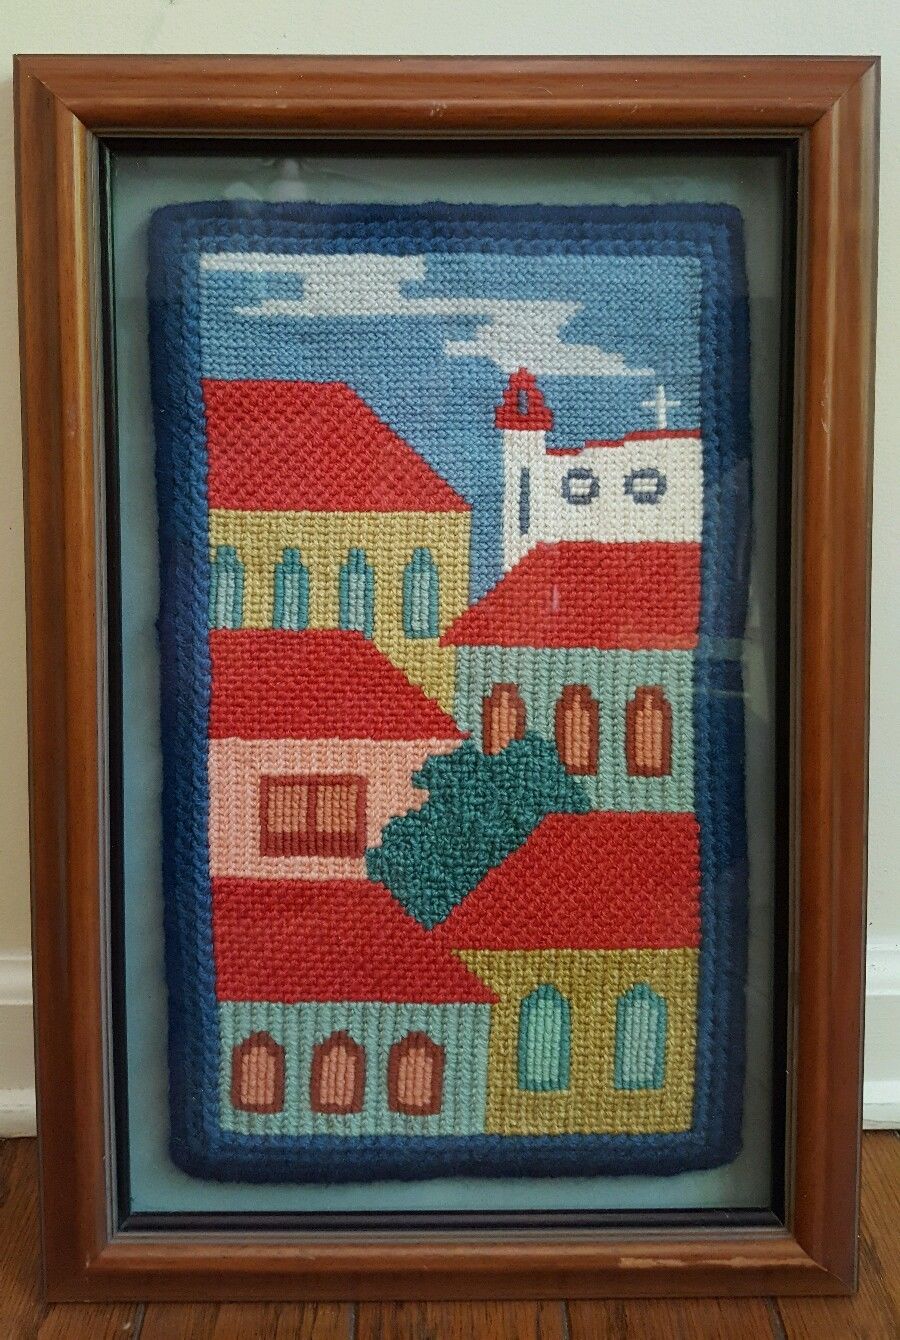 Framed needlepoint knitting artwork of  church and buildings skyline